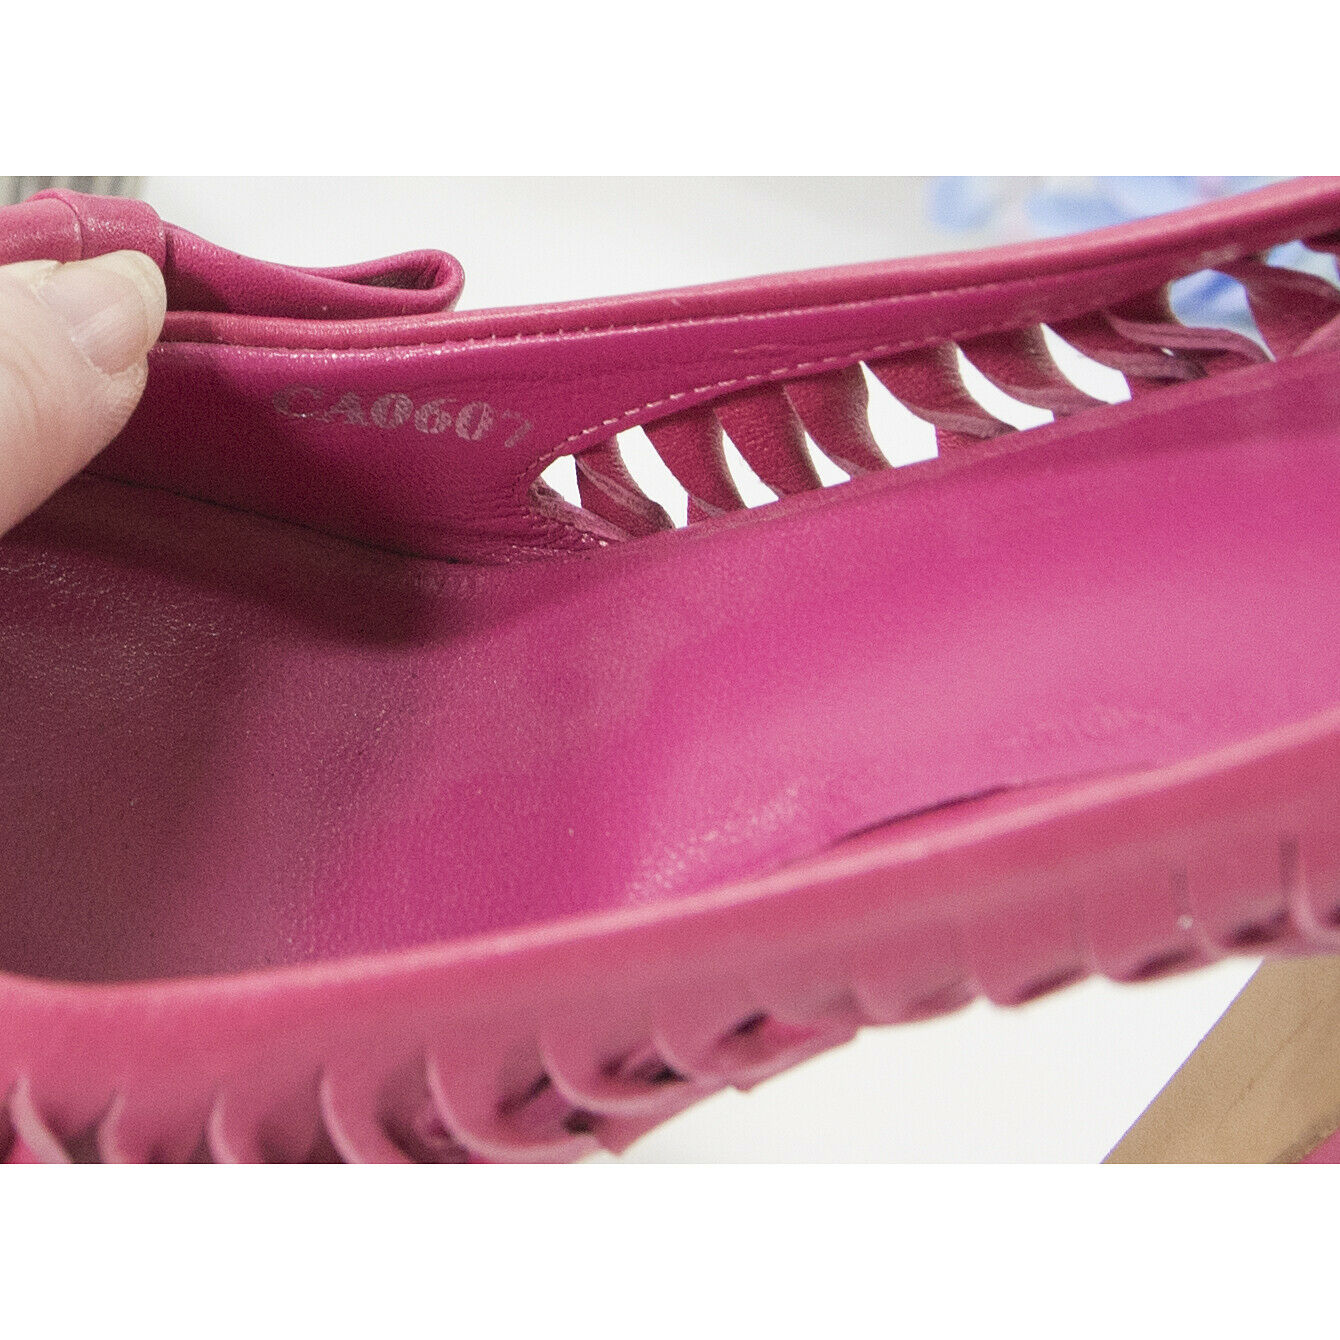 Christian Dior Hot Pink Fuchsia Twisted Leather Platform Pumps 37.5